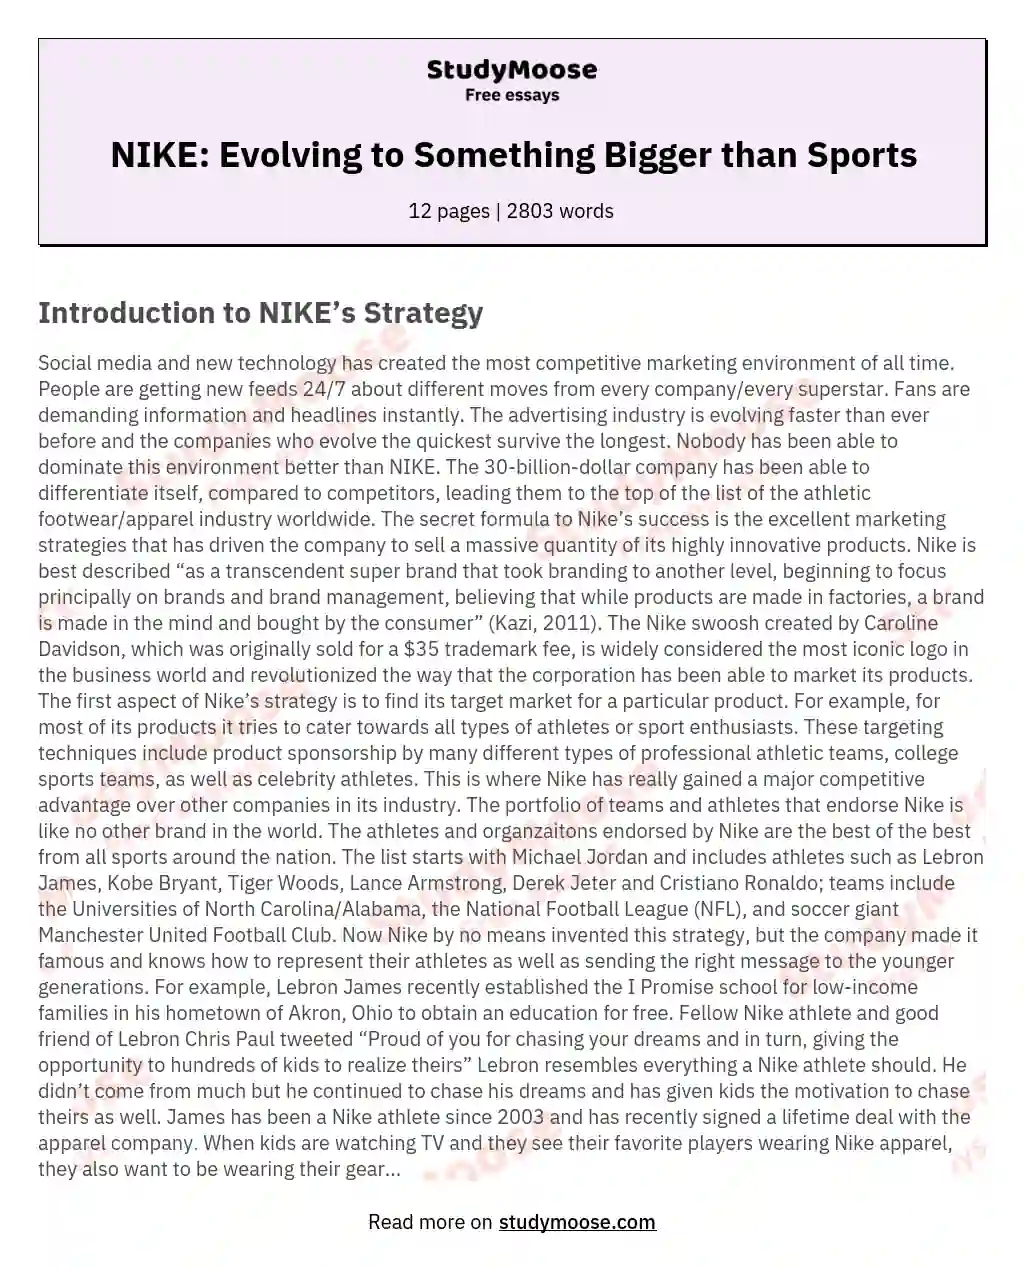 NIKE: Evolving to Something Bigger than Sports essay